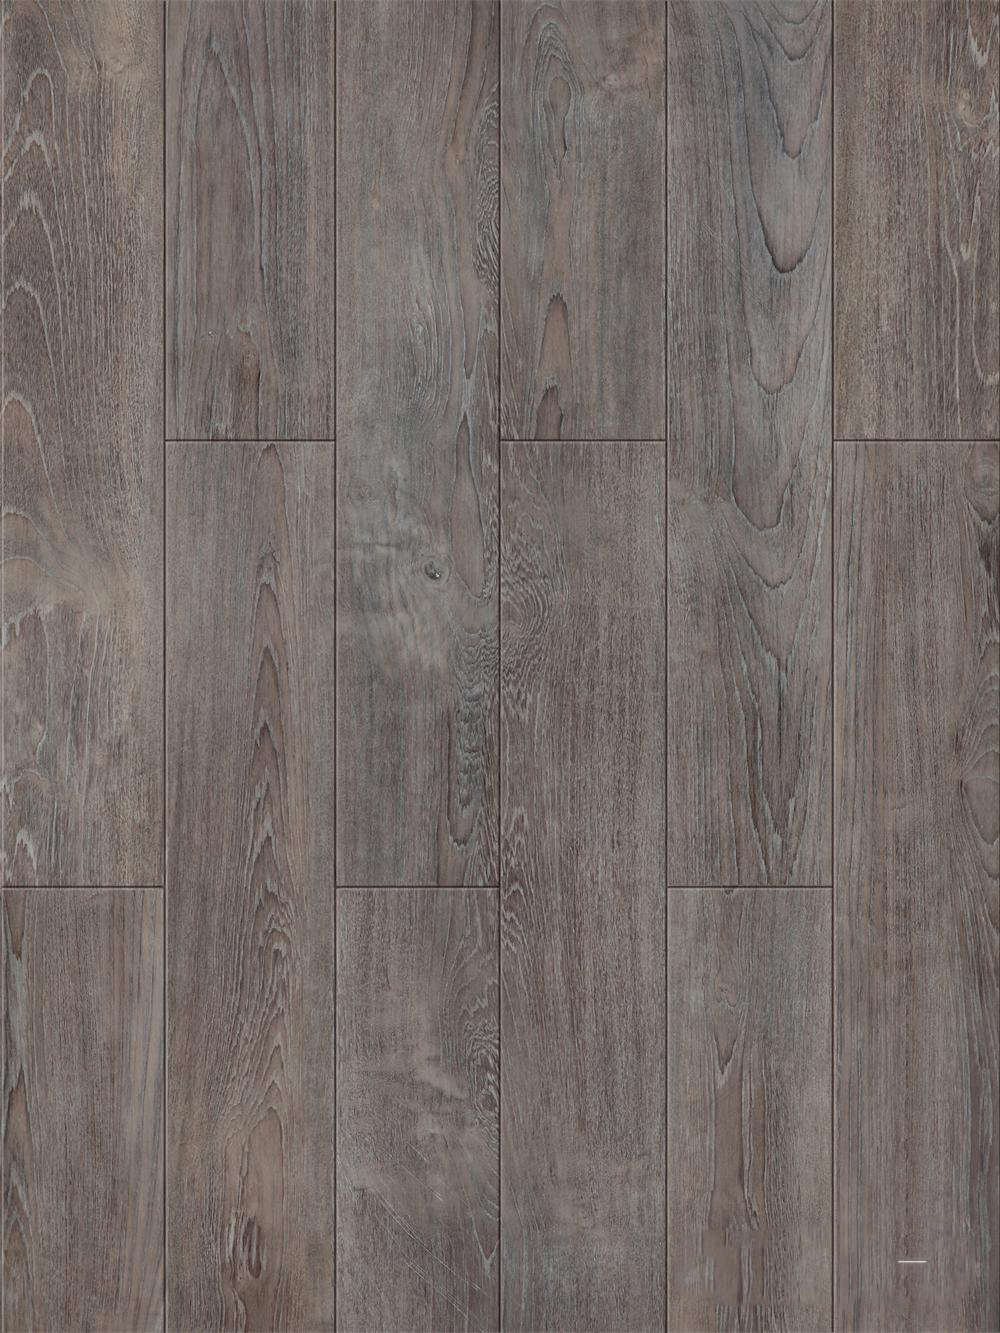 Luxury Vinyl Plank & Tile (LVT) Flooring Collections | Stone Barn Floors